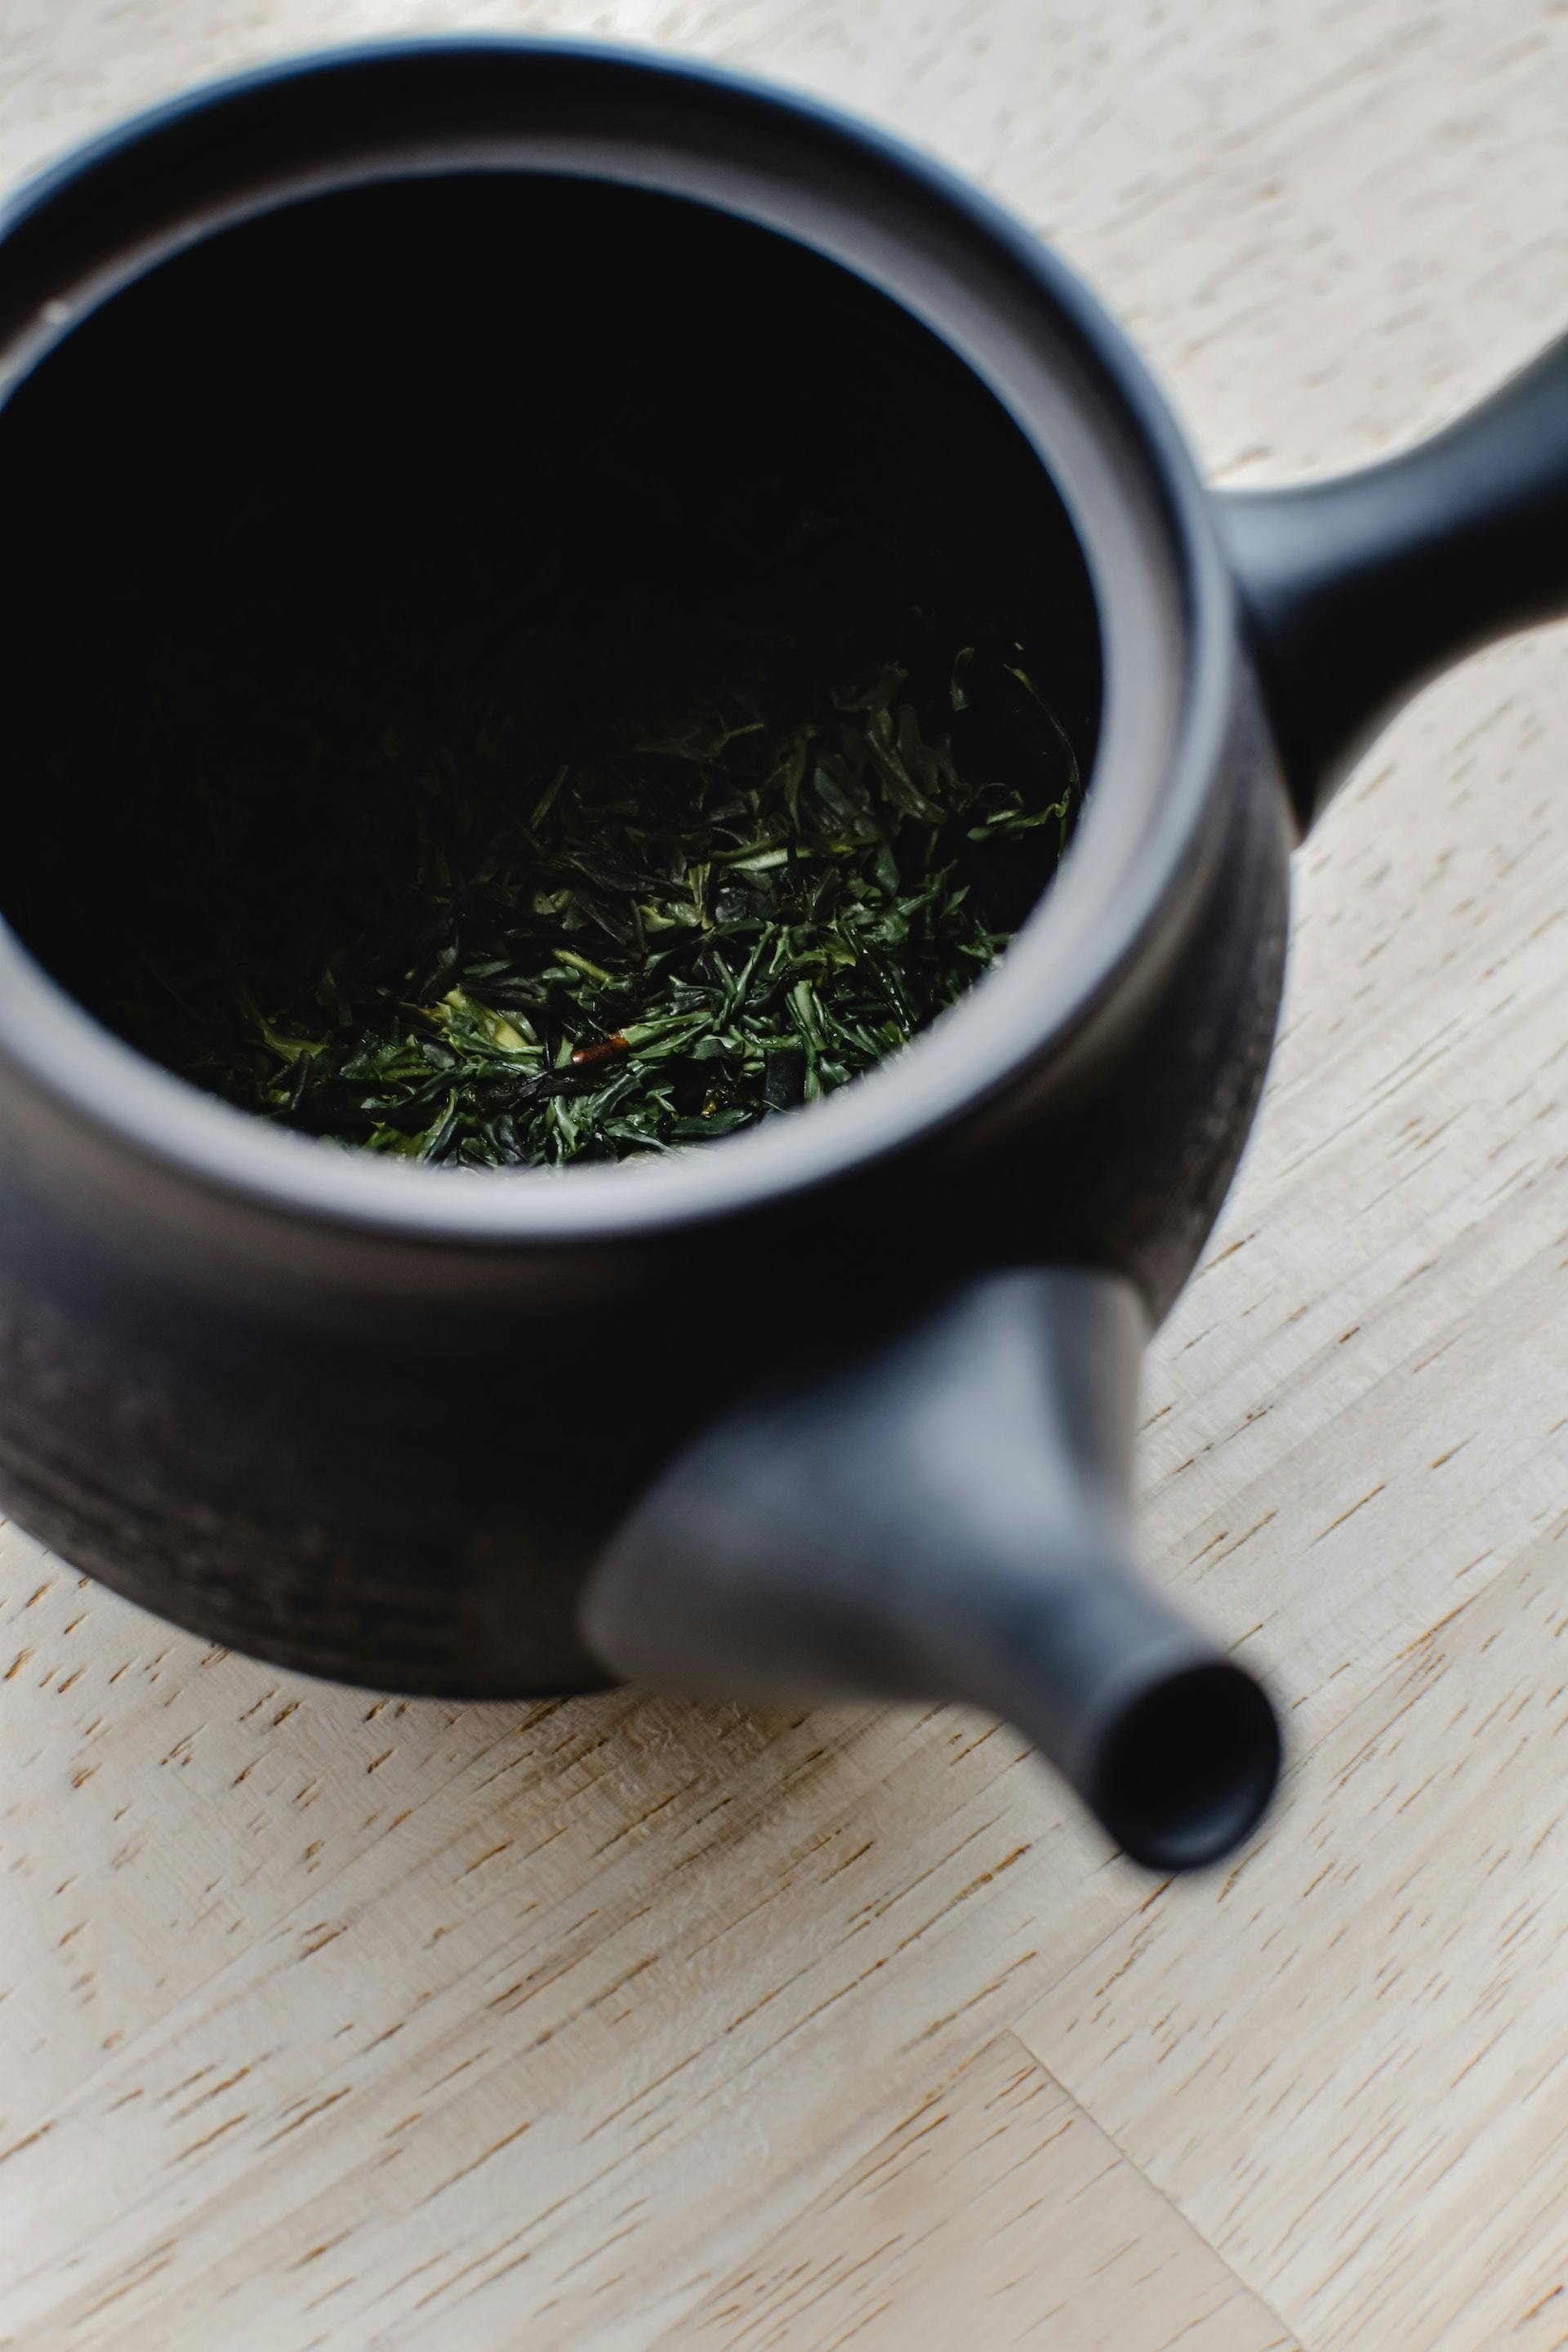 Background image - green tea leaves inside black kyusu